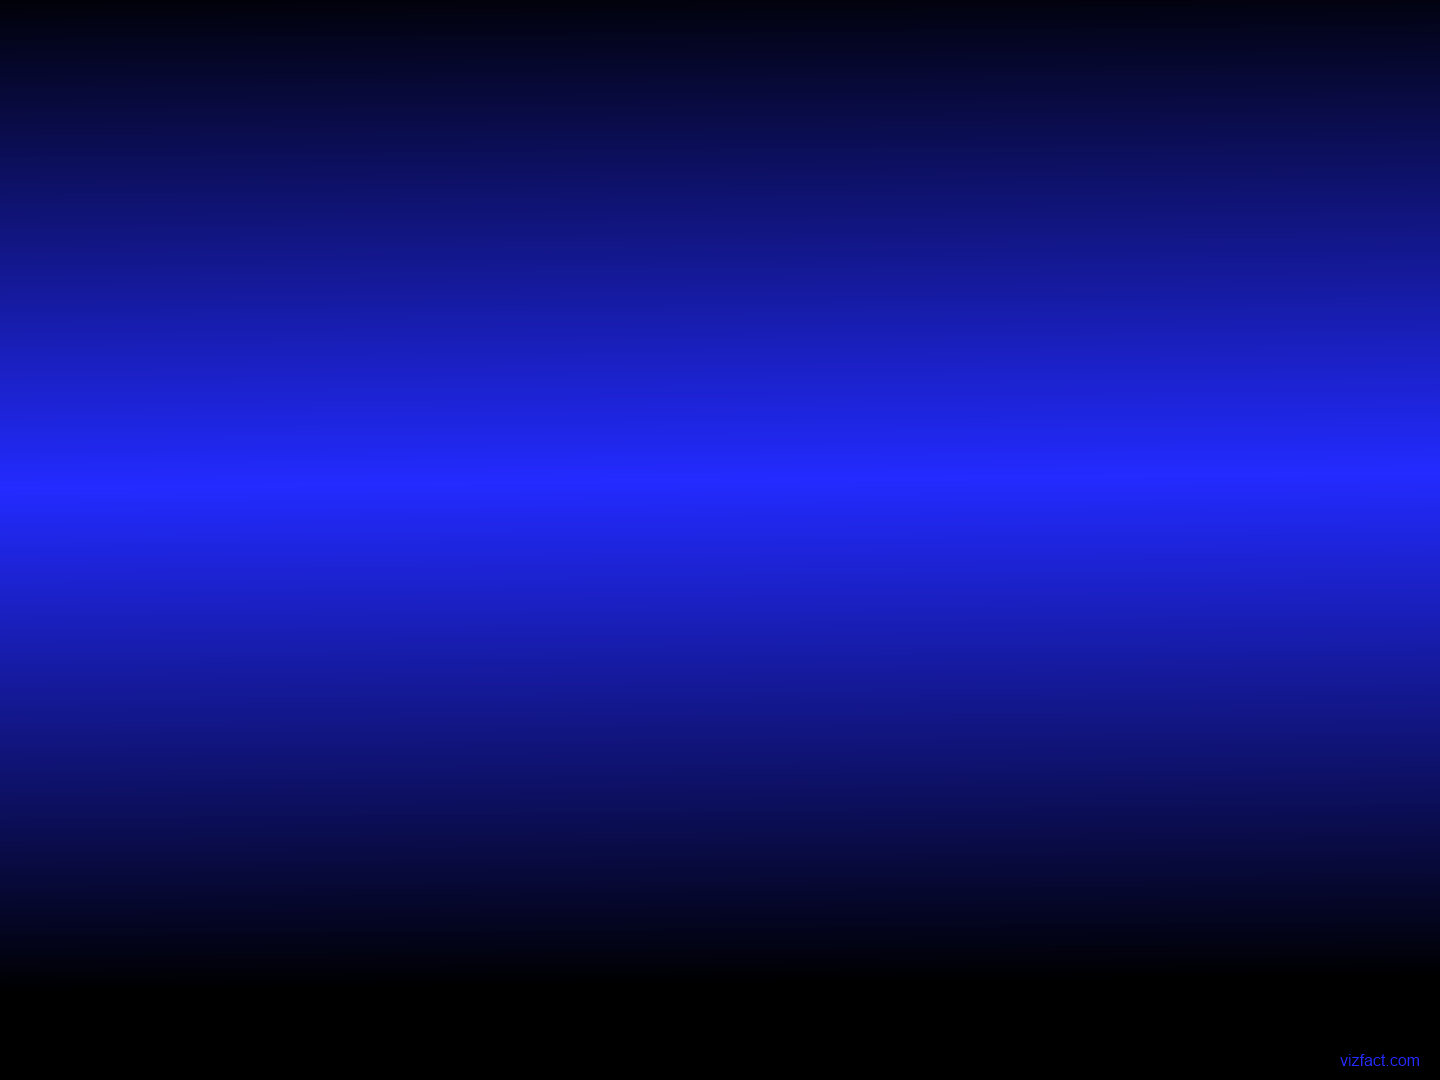 Background Wallpaper Blue Black Gradient Vizfact Dot